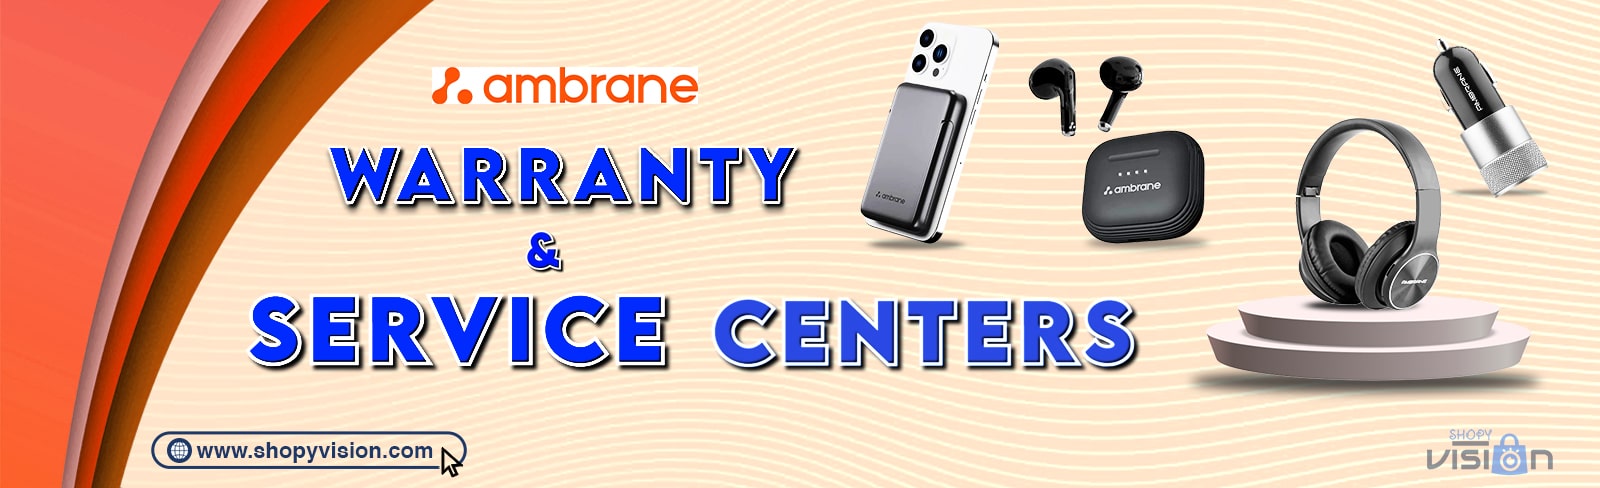 Ambrane Warranty & Service Center in India